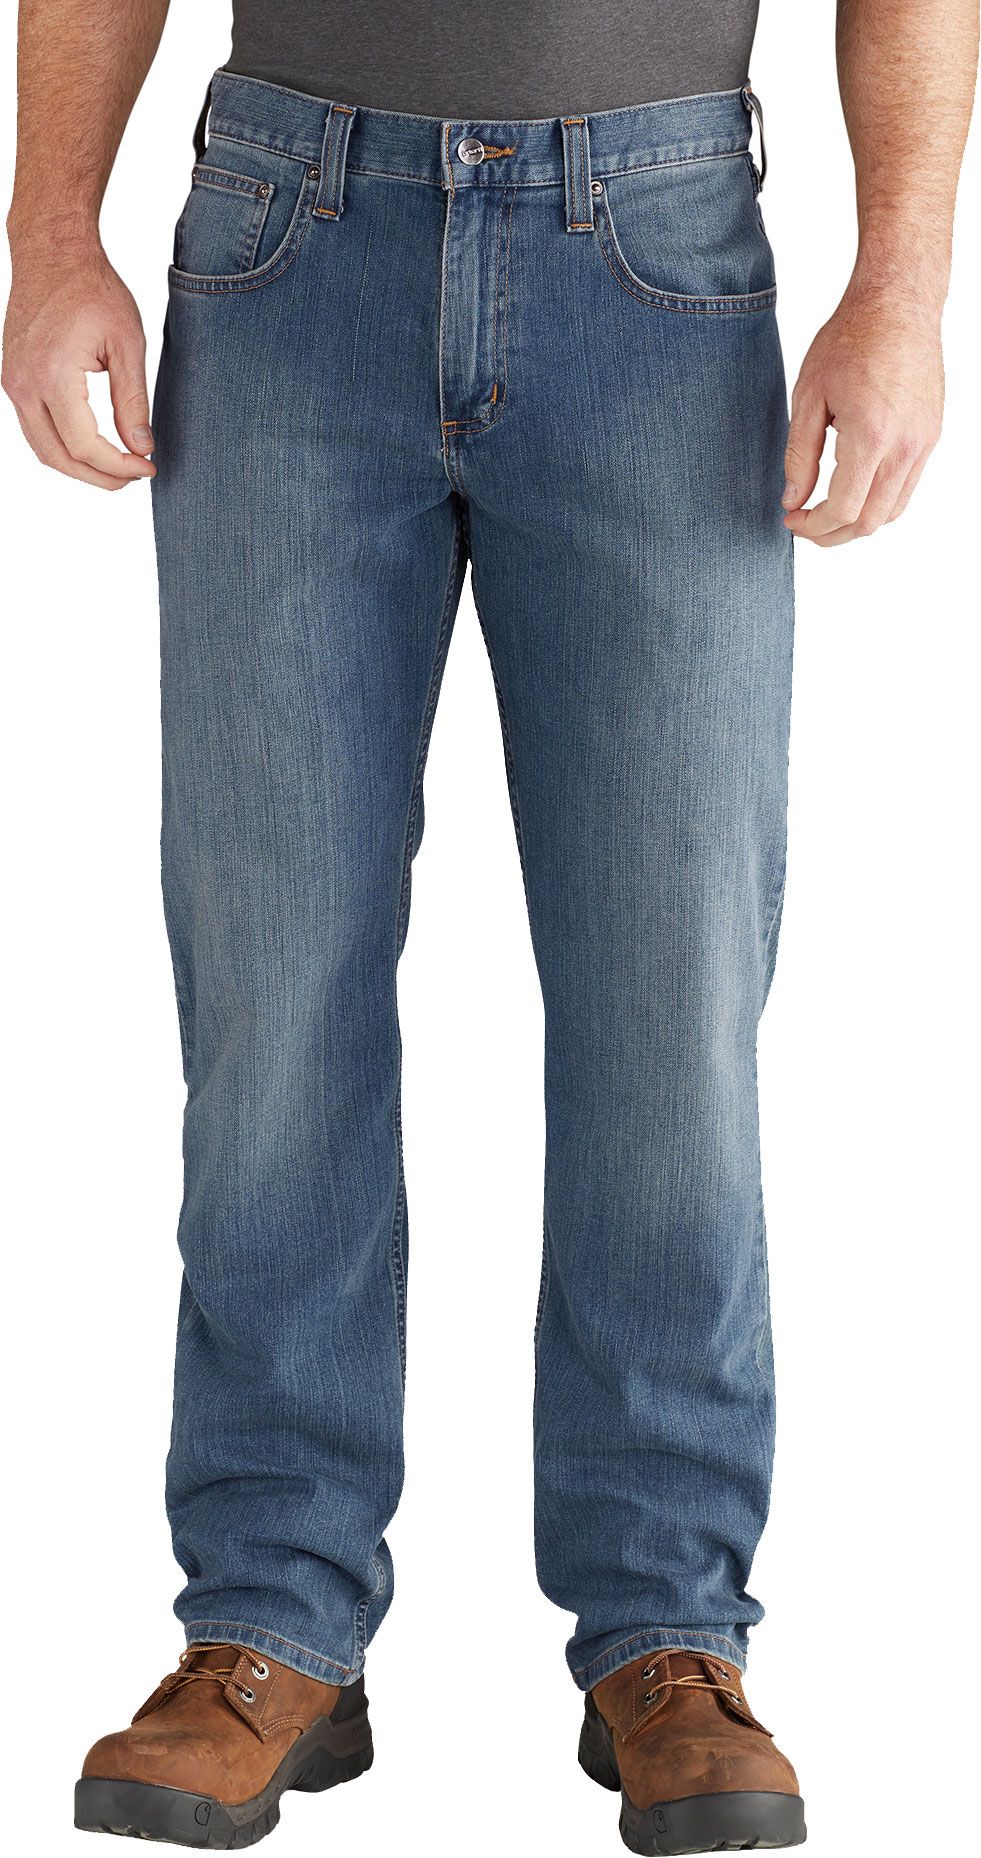 men's carhartt blue jeans